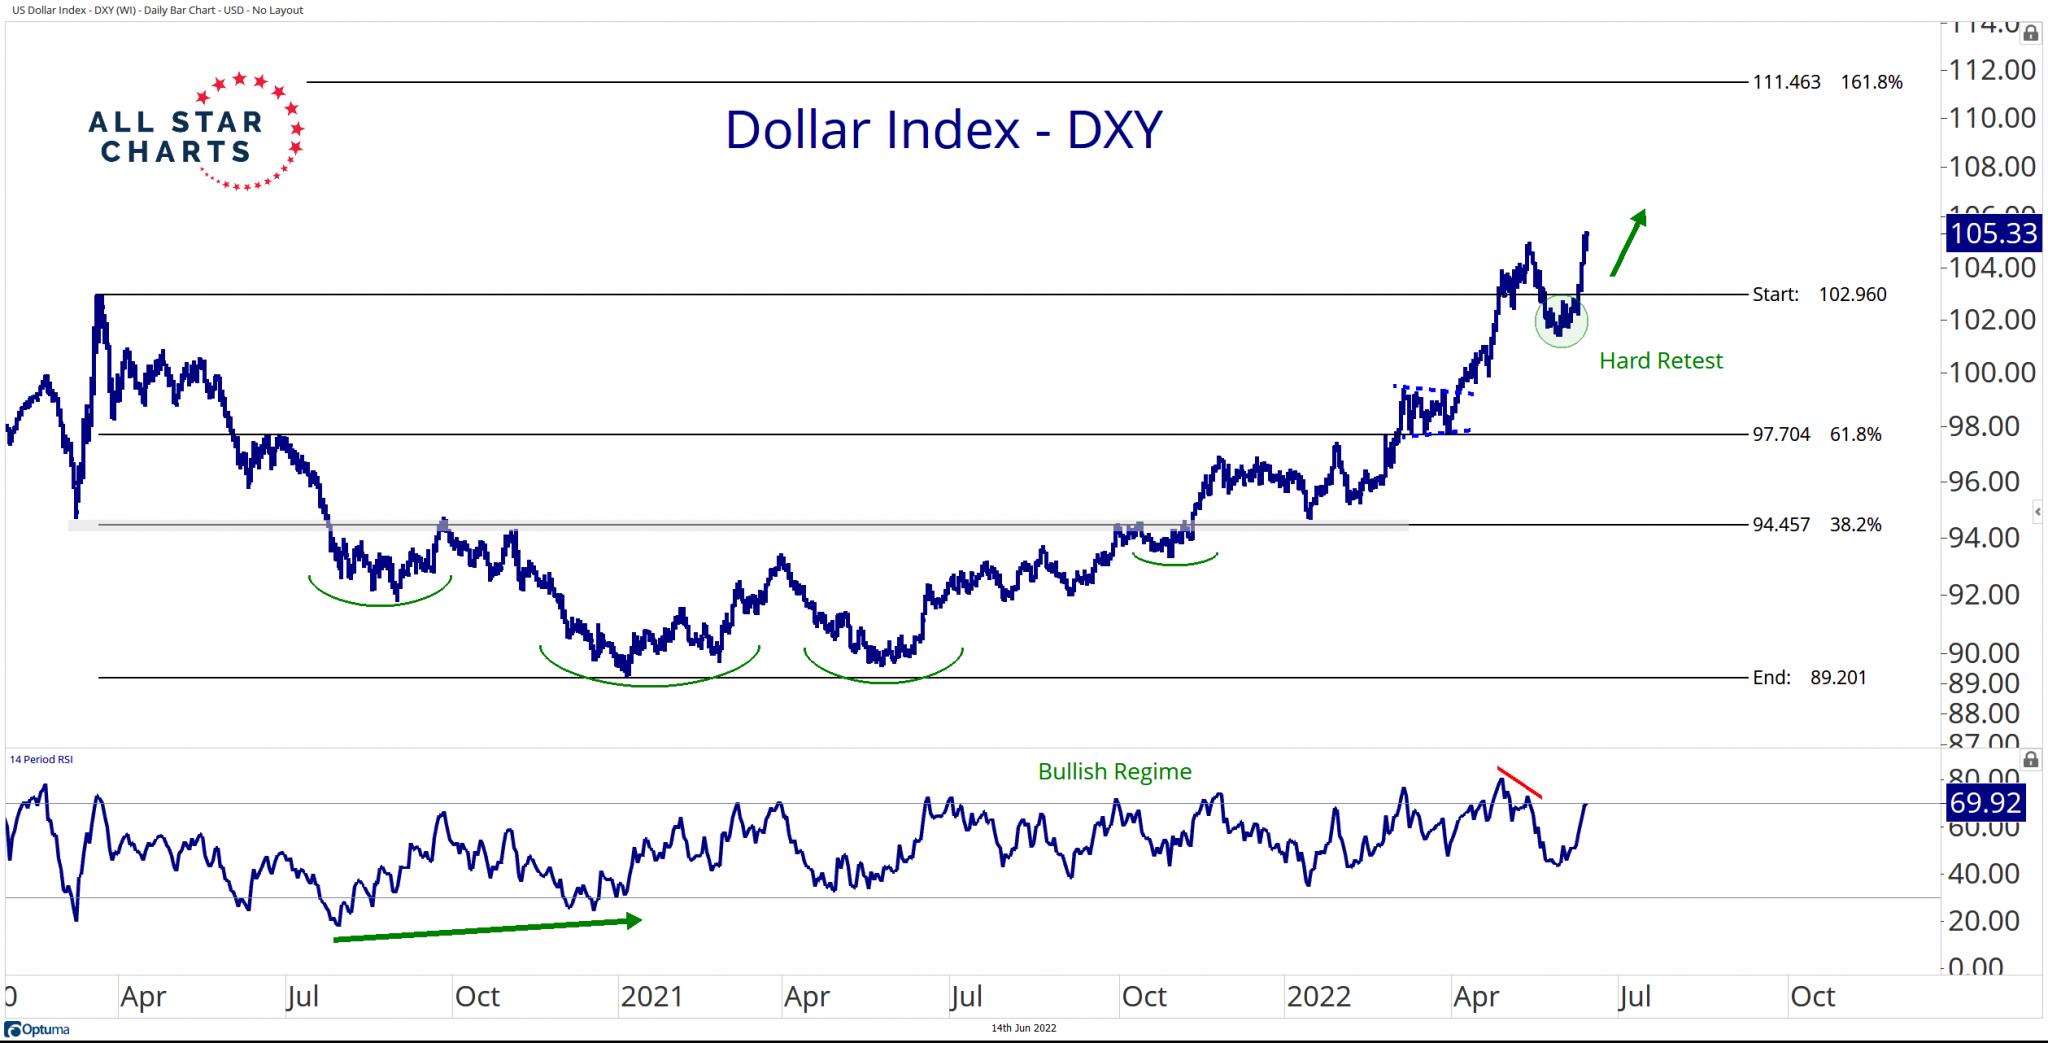 Dollar Up, Stocks Down All Star Charts